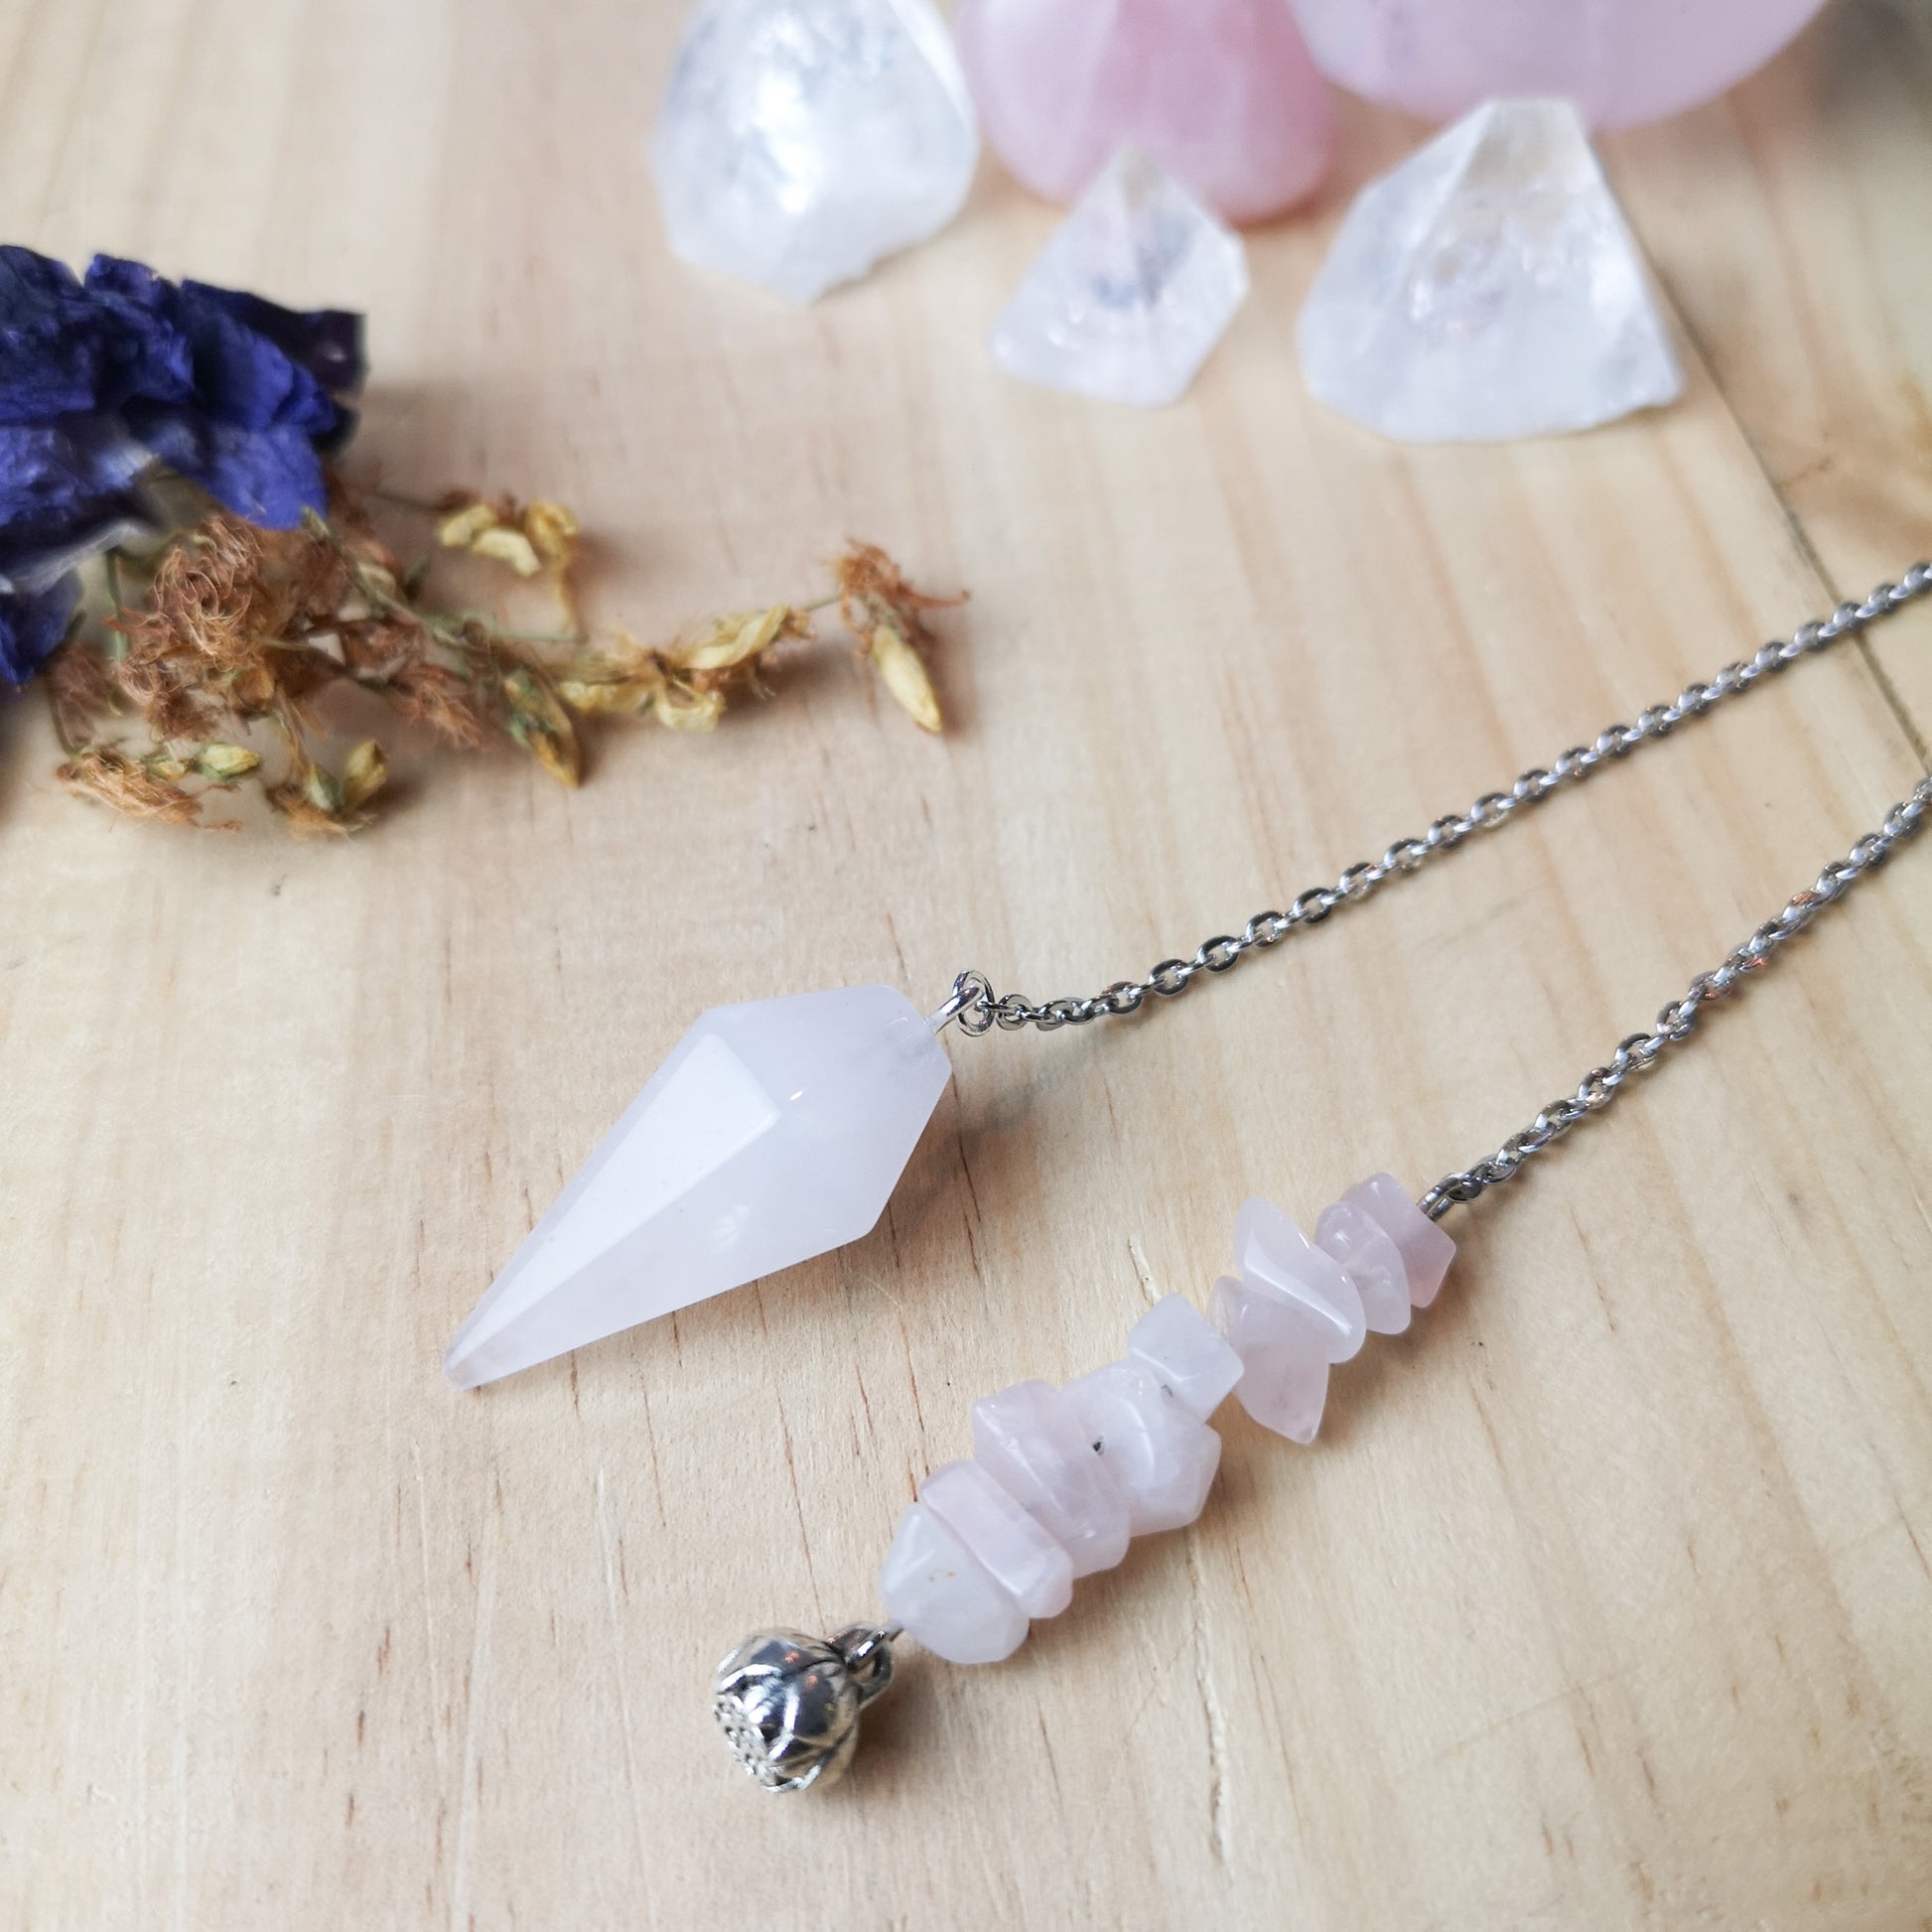 Rose quartz dowsing pendulum, with a lotus seed charm, gemstone spiritual divination tool